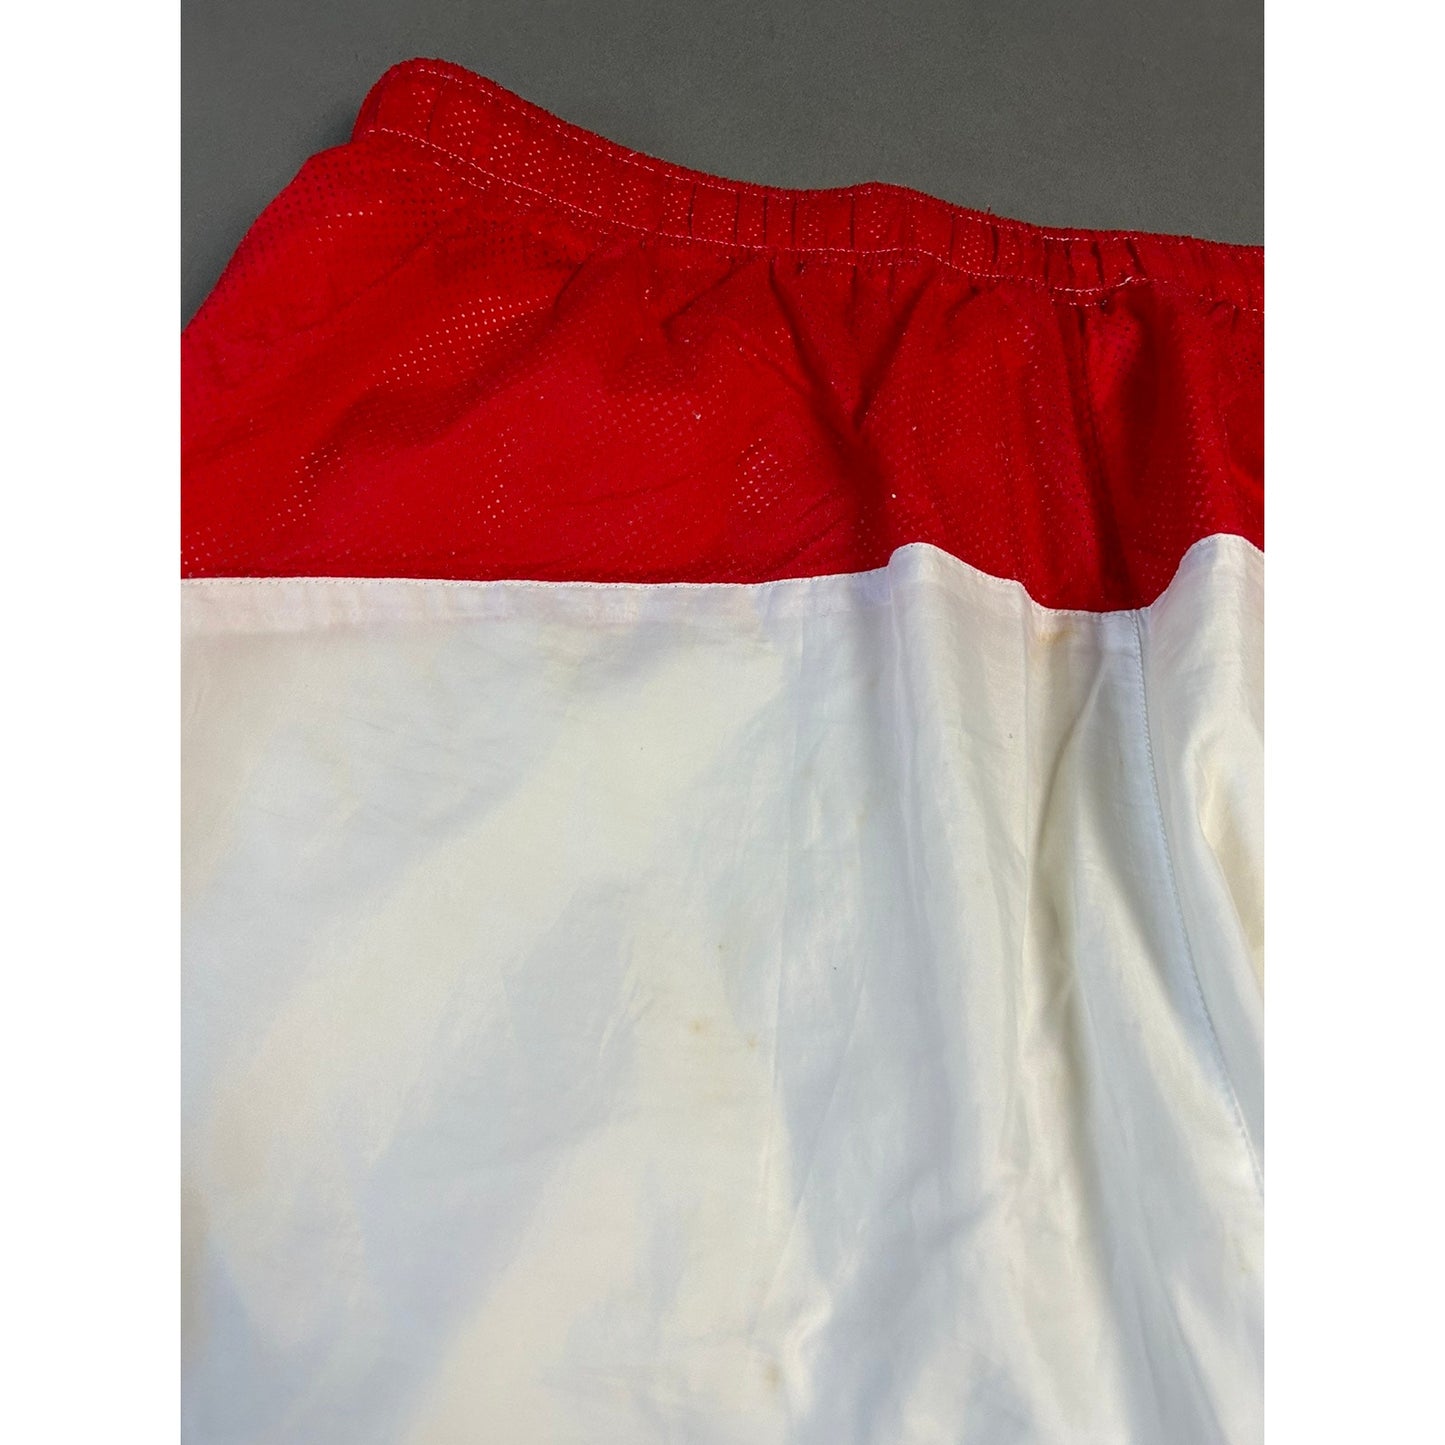 Nike vintage white red shorts hex logo 2000s